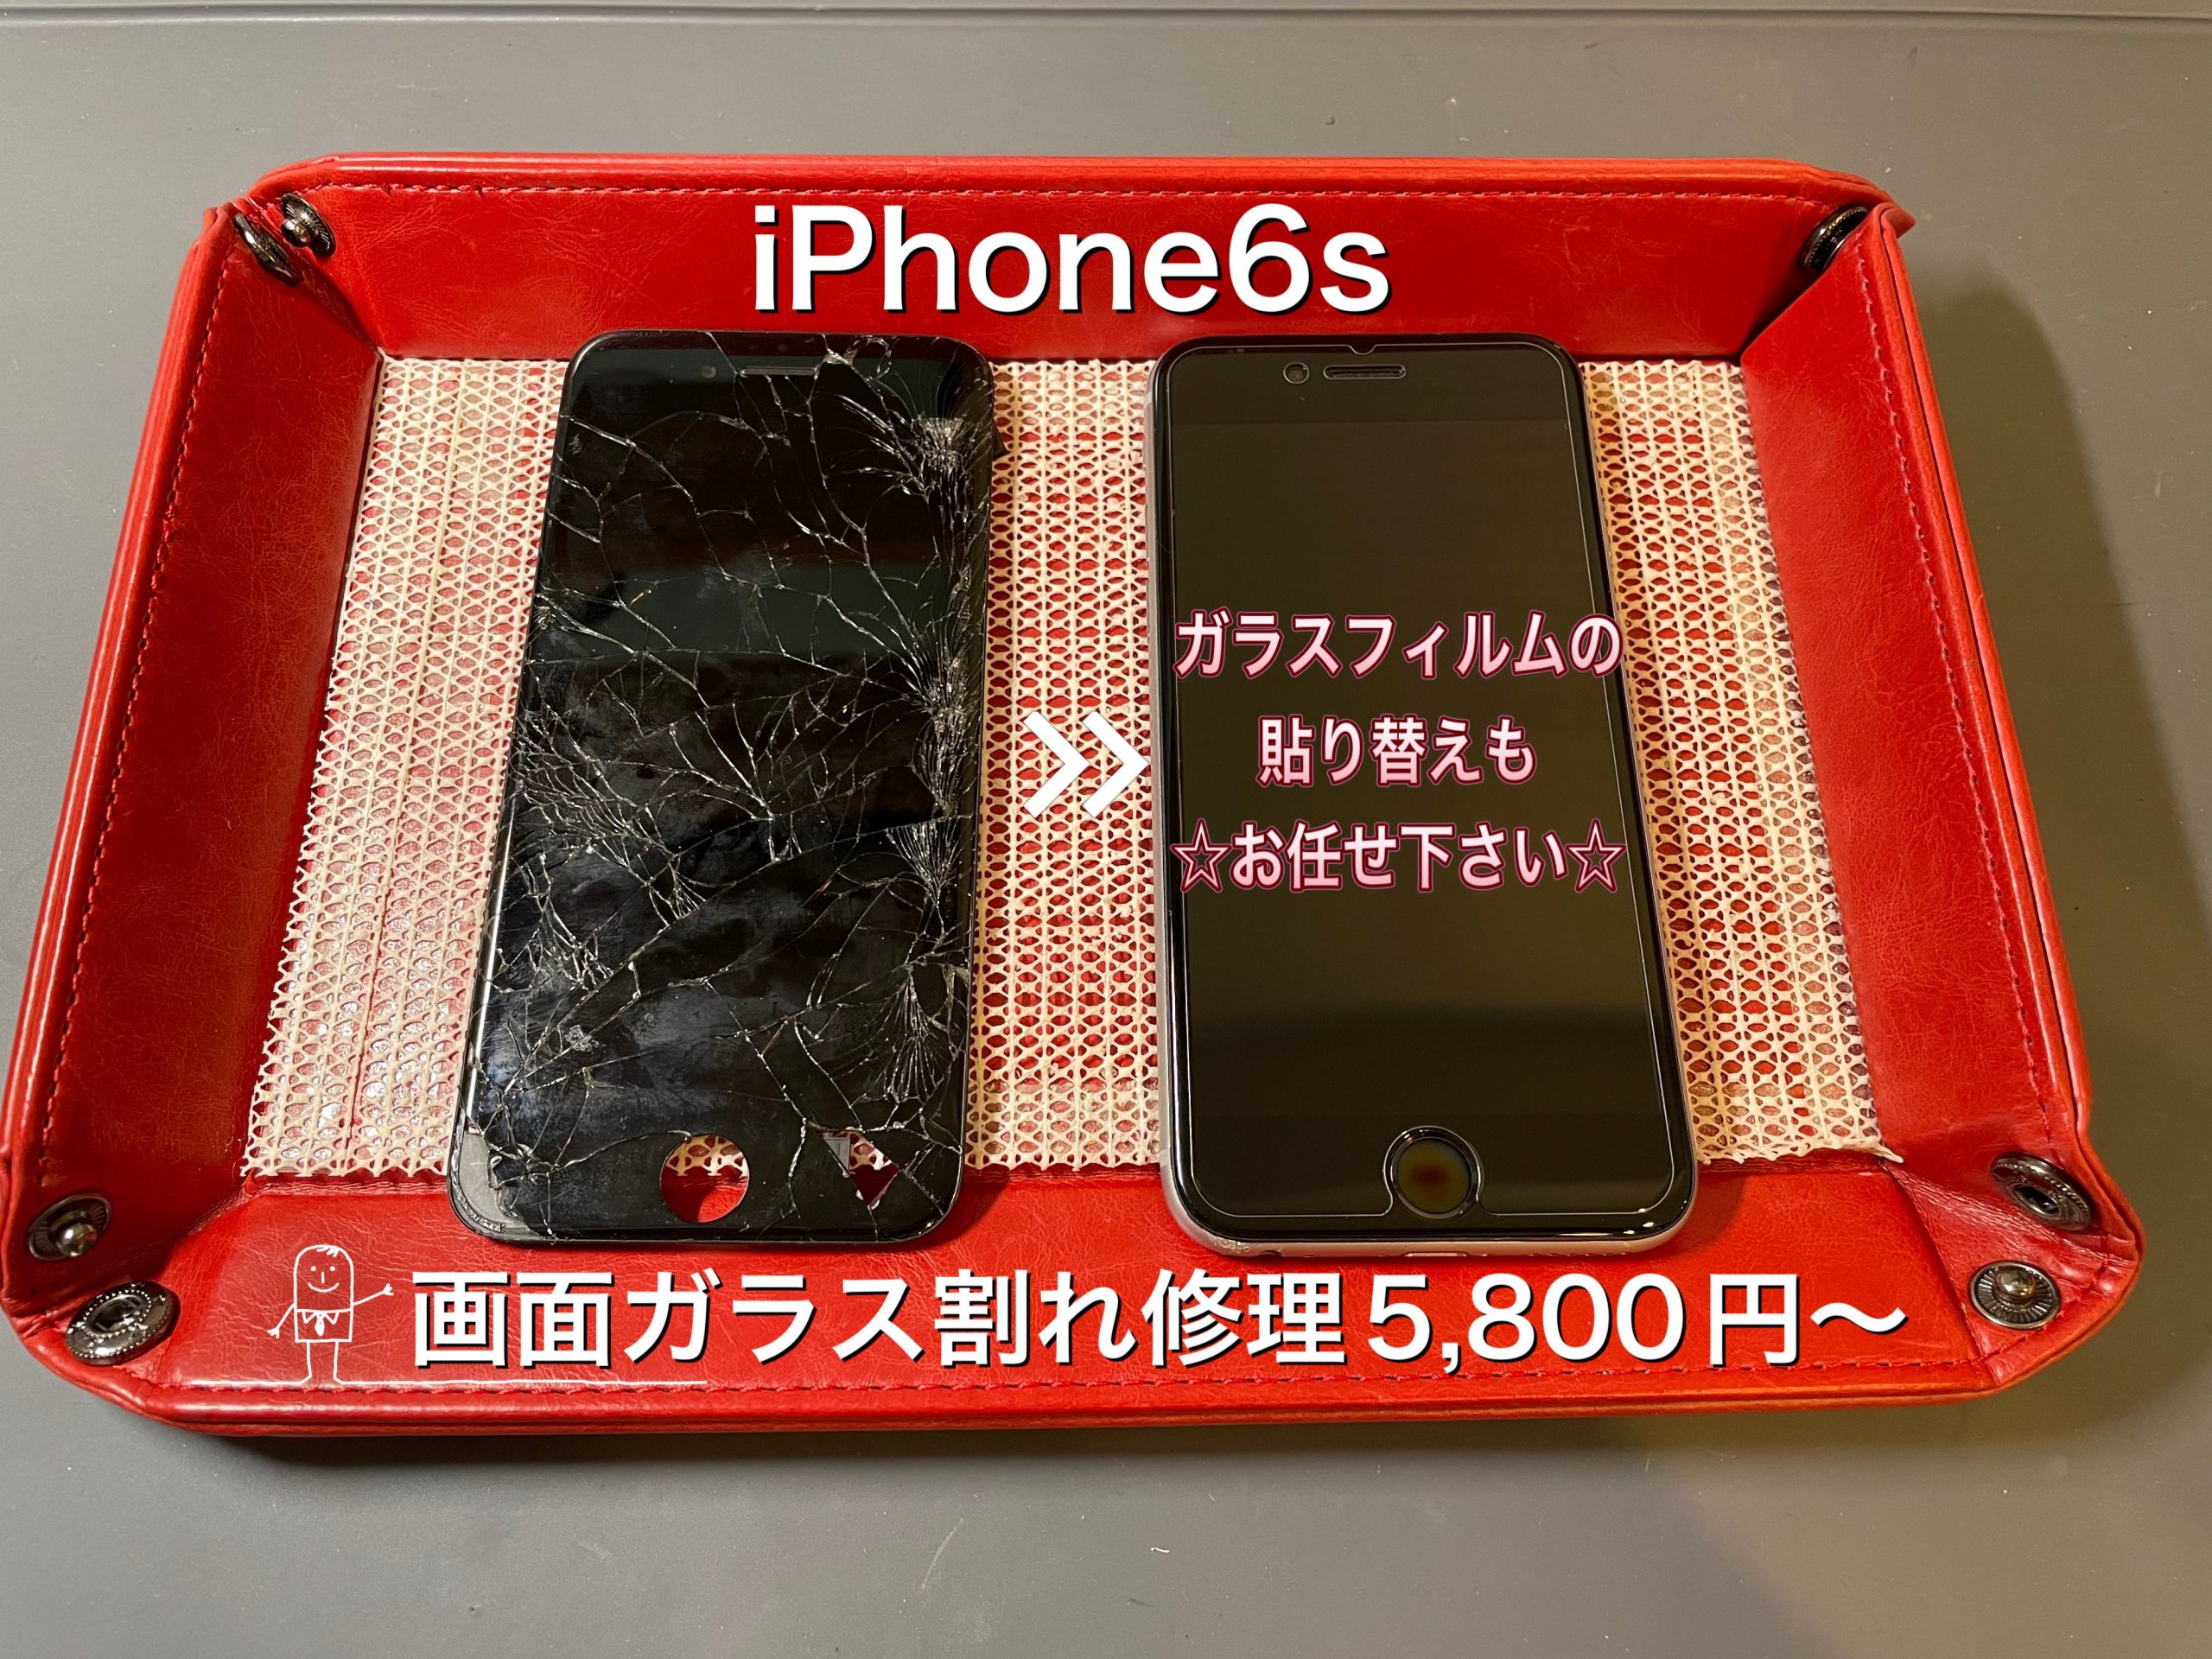 iPhone6s画面ガラス割れ修理もお任せ下さい！！